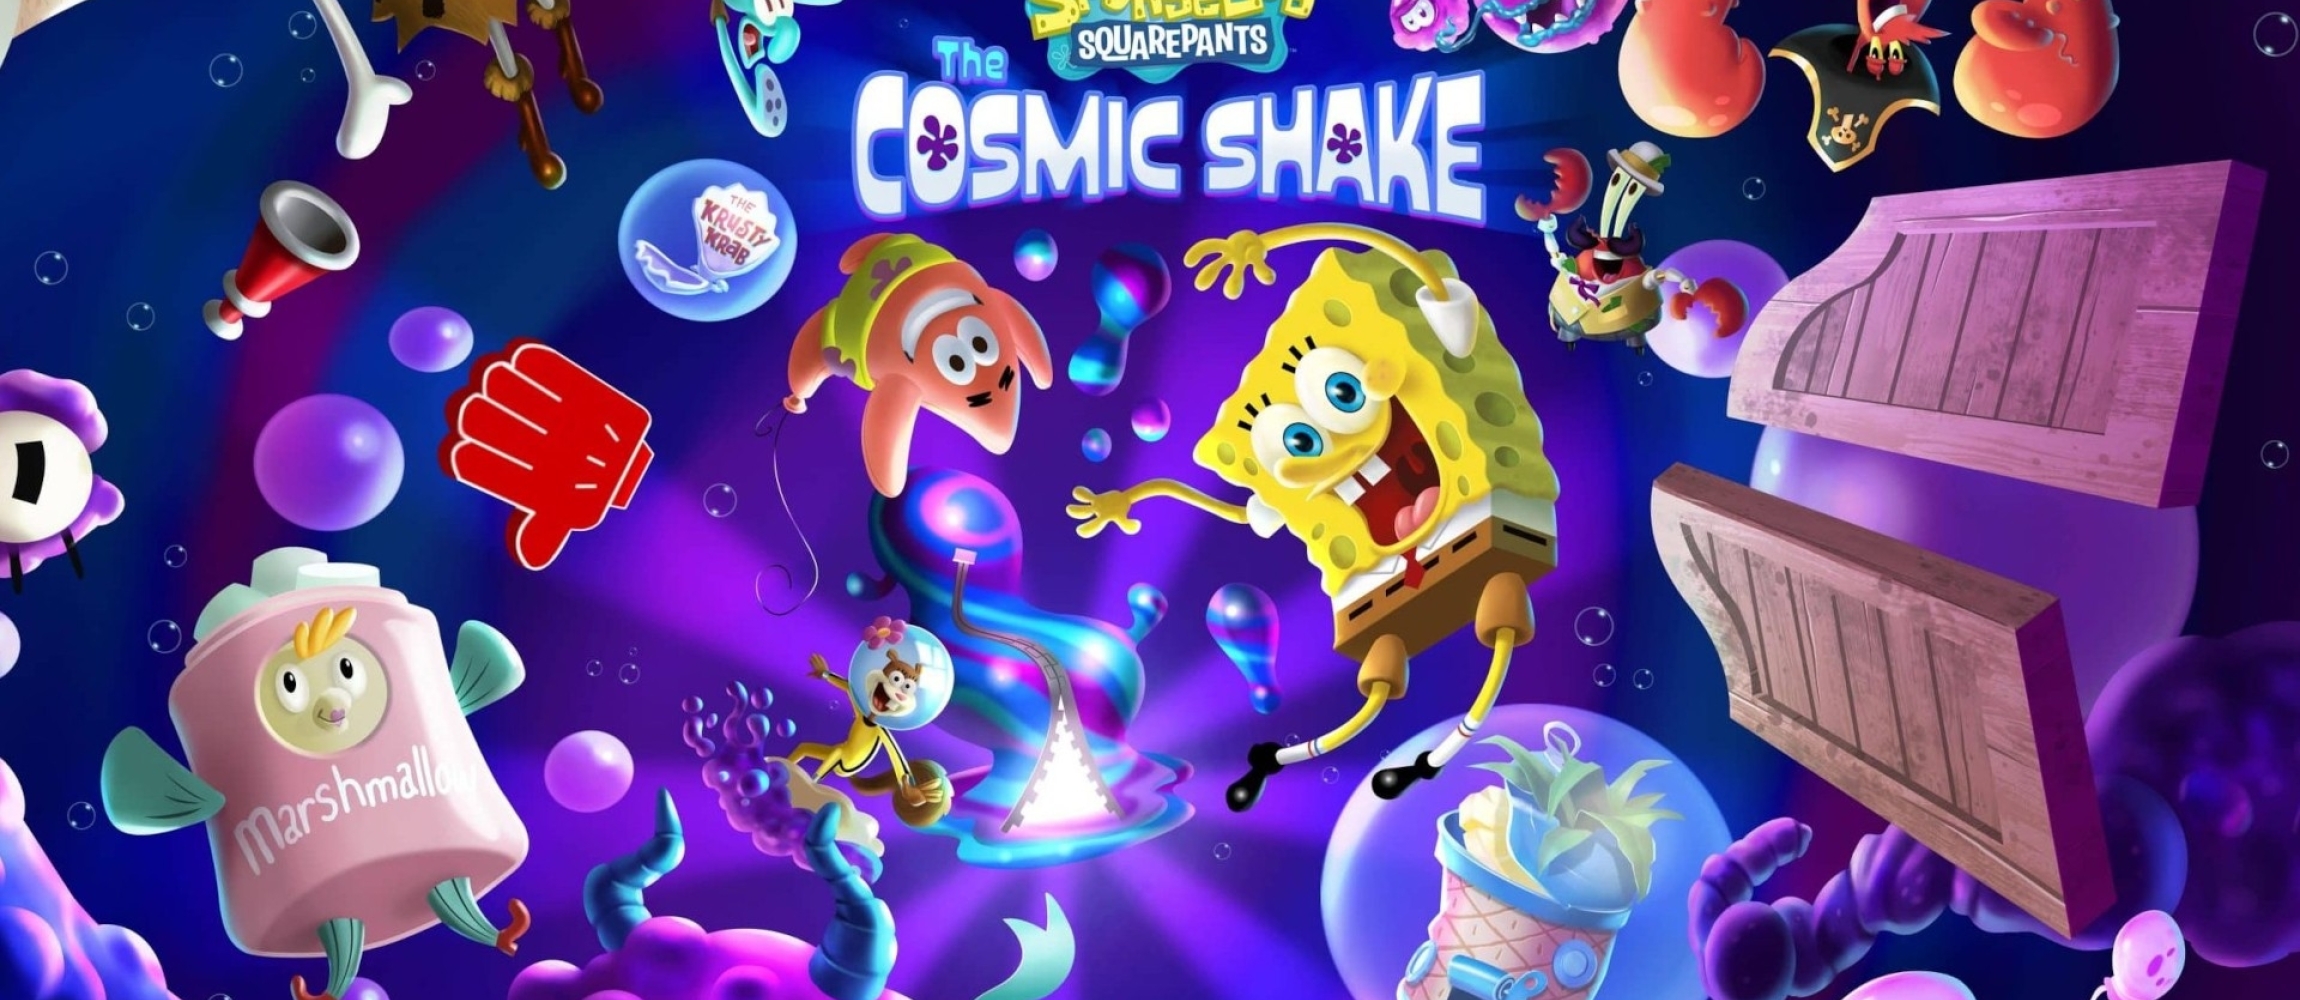 2300x1000 SpongeBob SquarePants The Cosmic Shake HD 2300x1000 ...